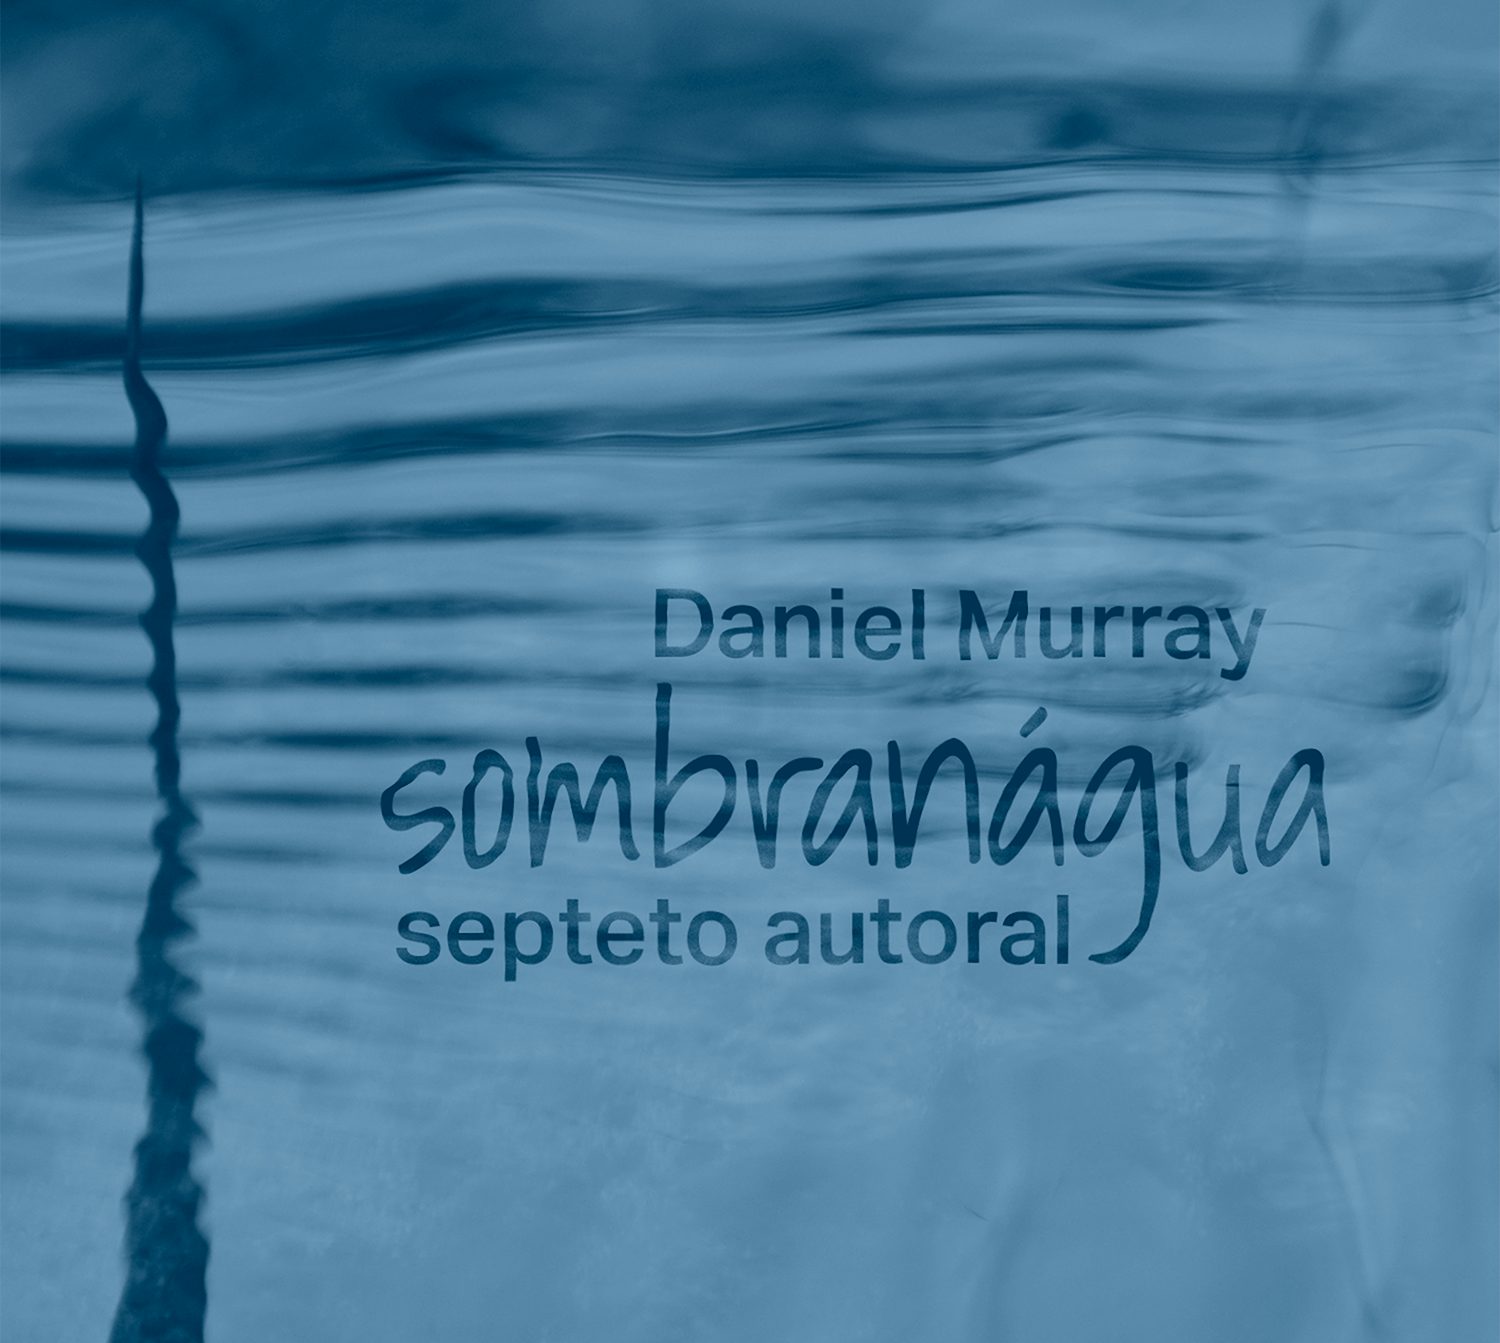 Daniel Murray - sombranágua - septeto  autoral